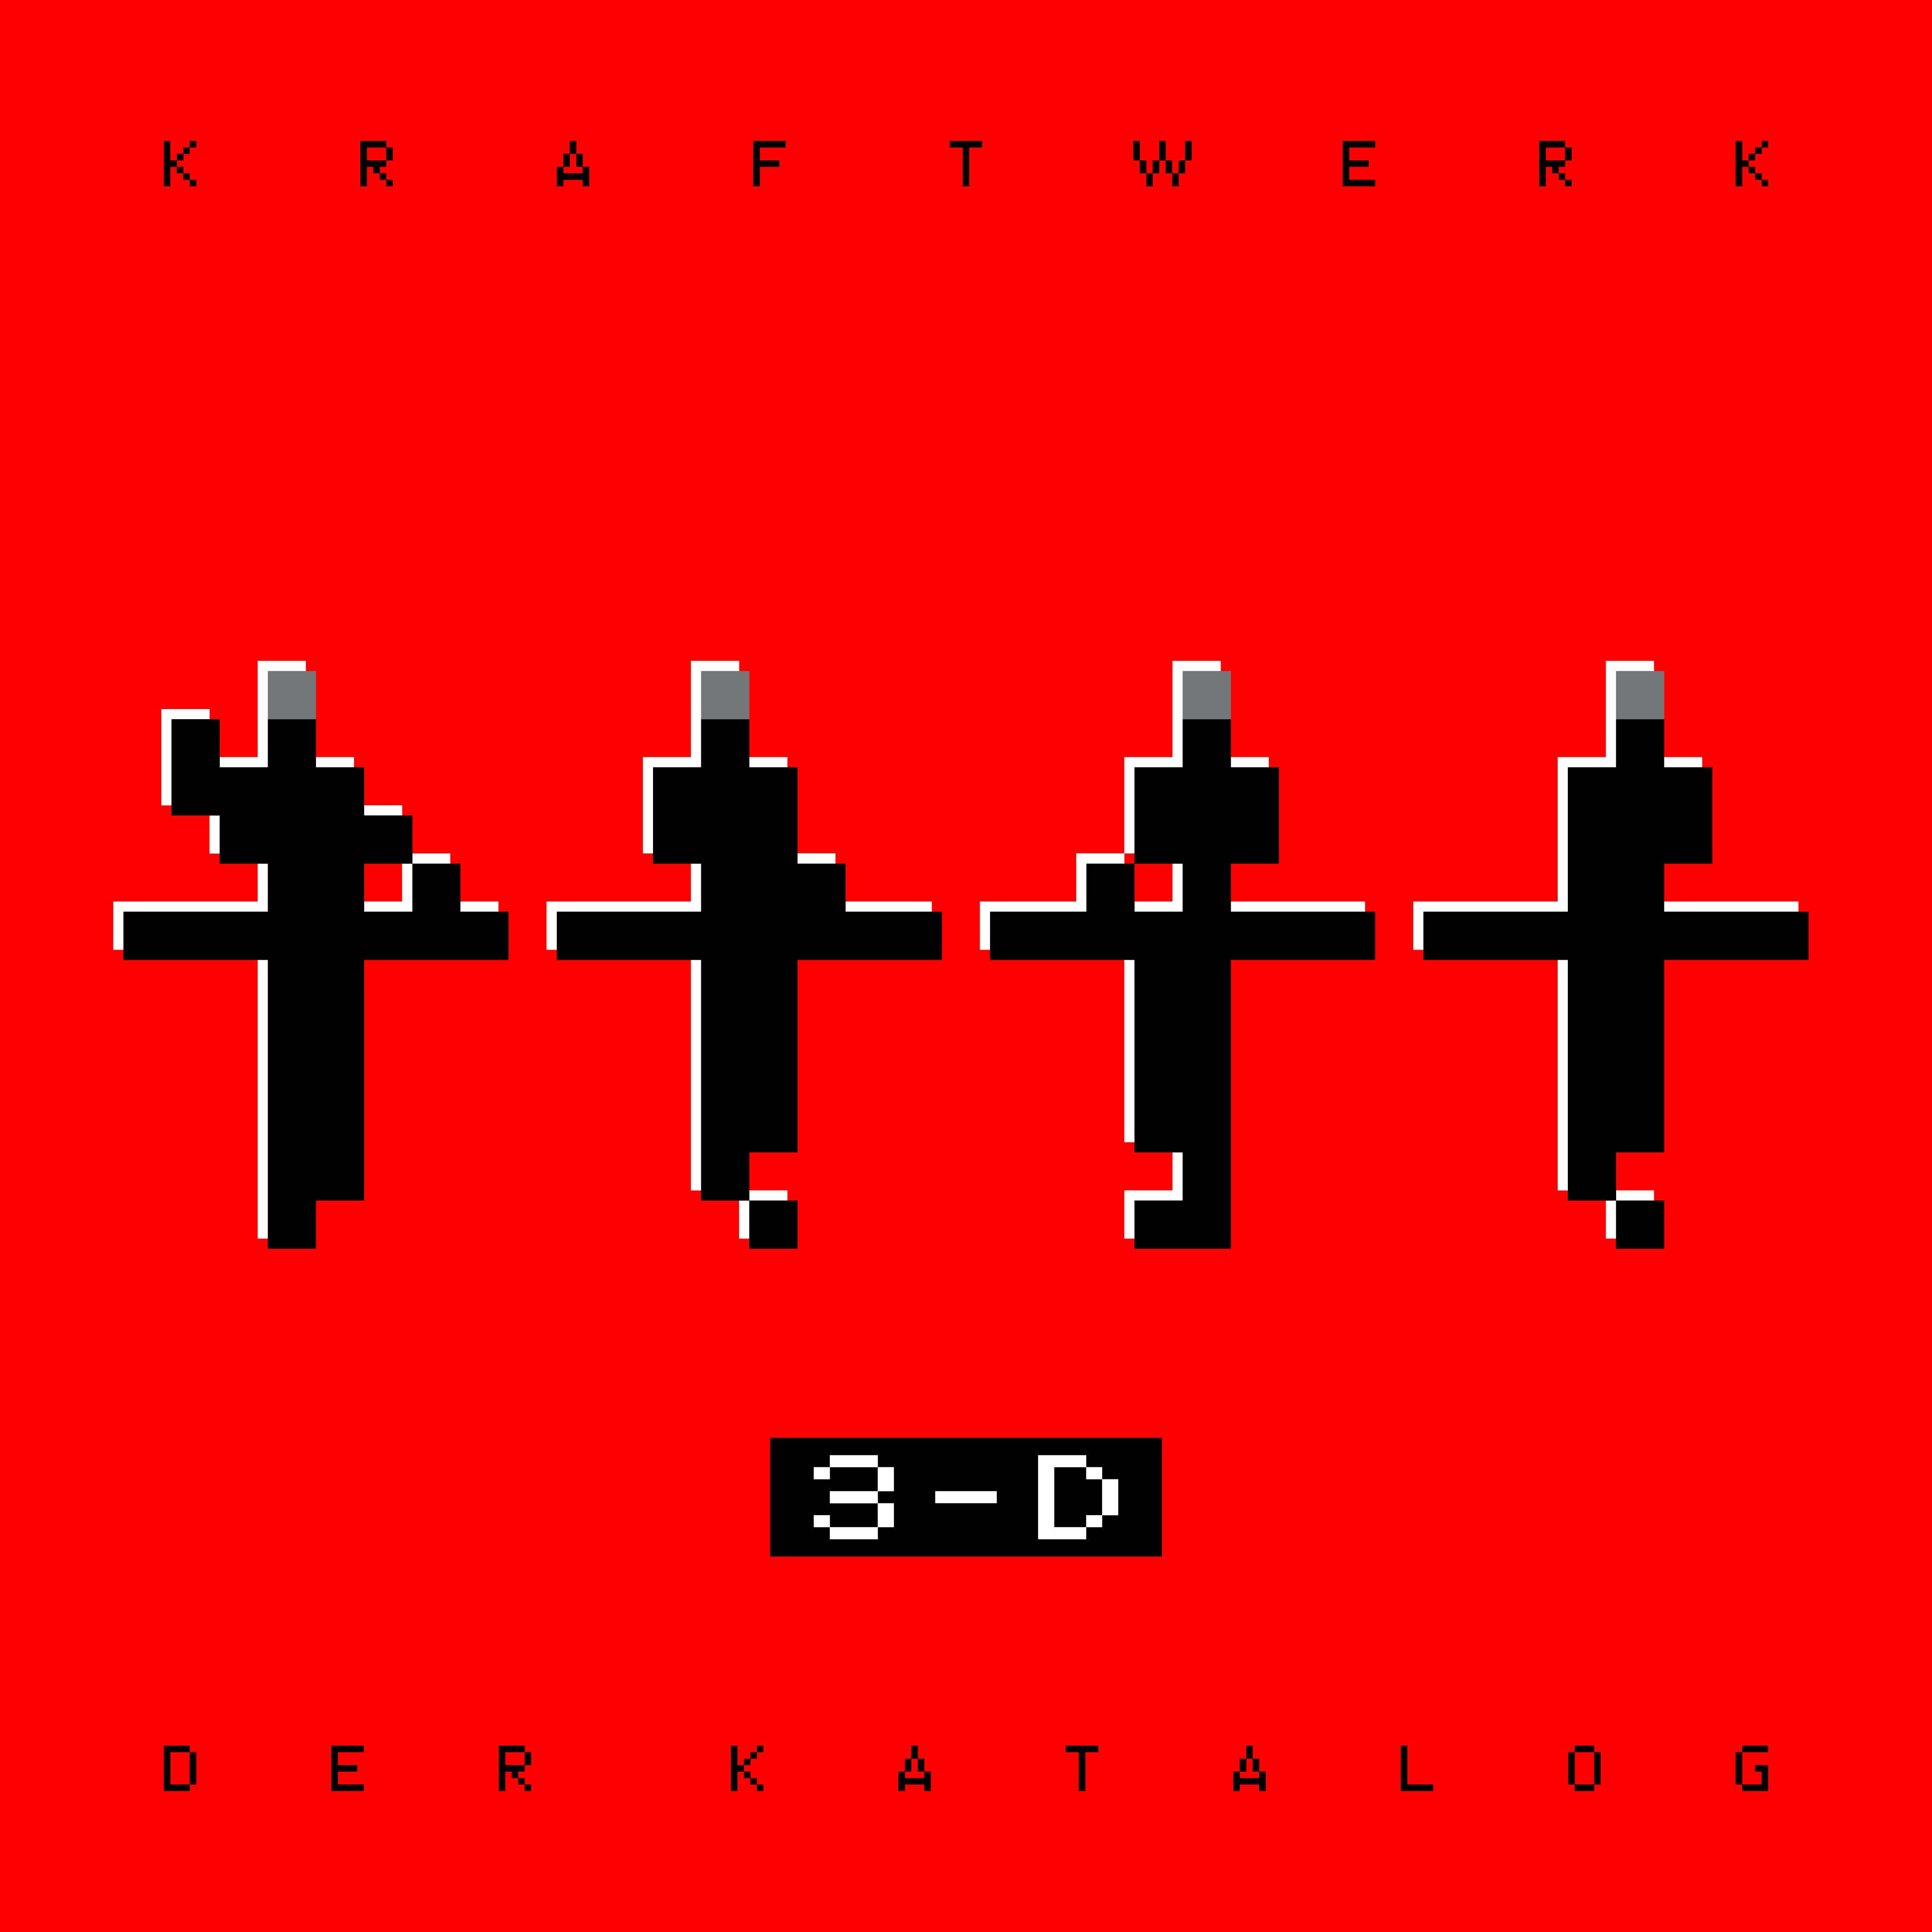 Katalog Box - (CD) Language) 3-D - (Deluxe Set-German Der Kraftwerk